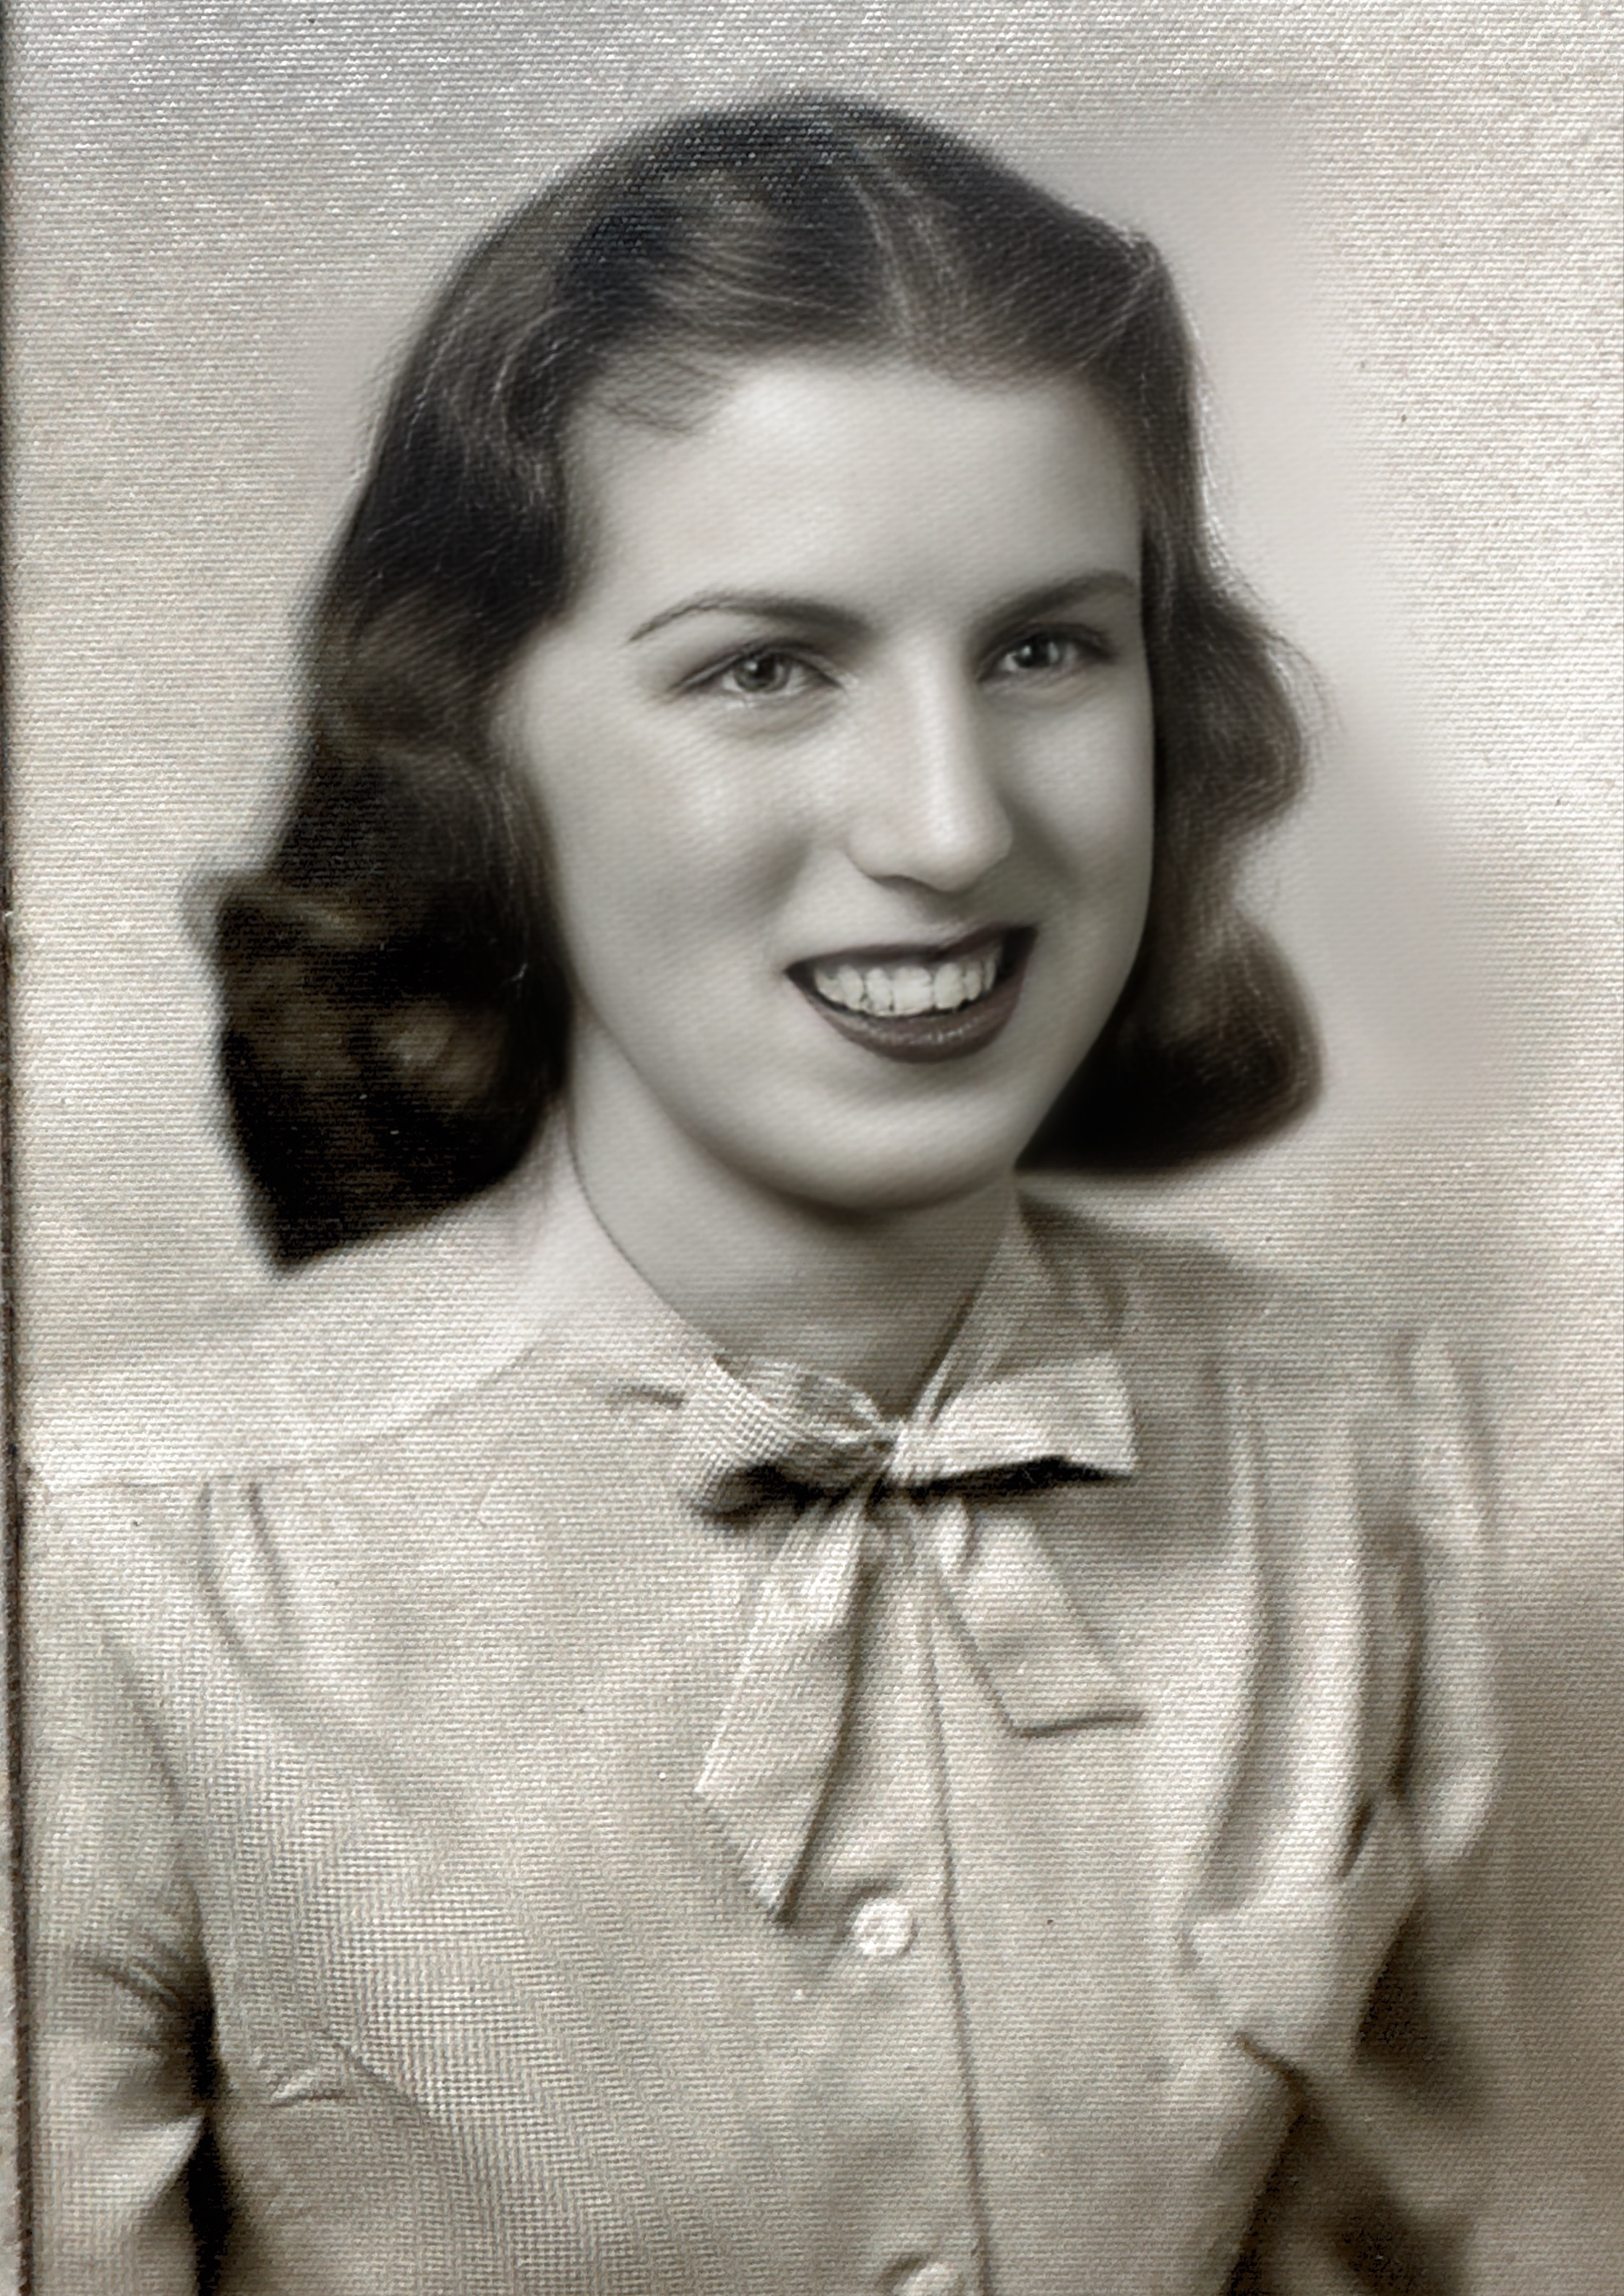 Luella Wegner High school senior photo 1945